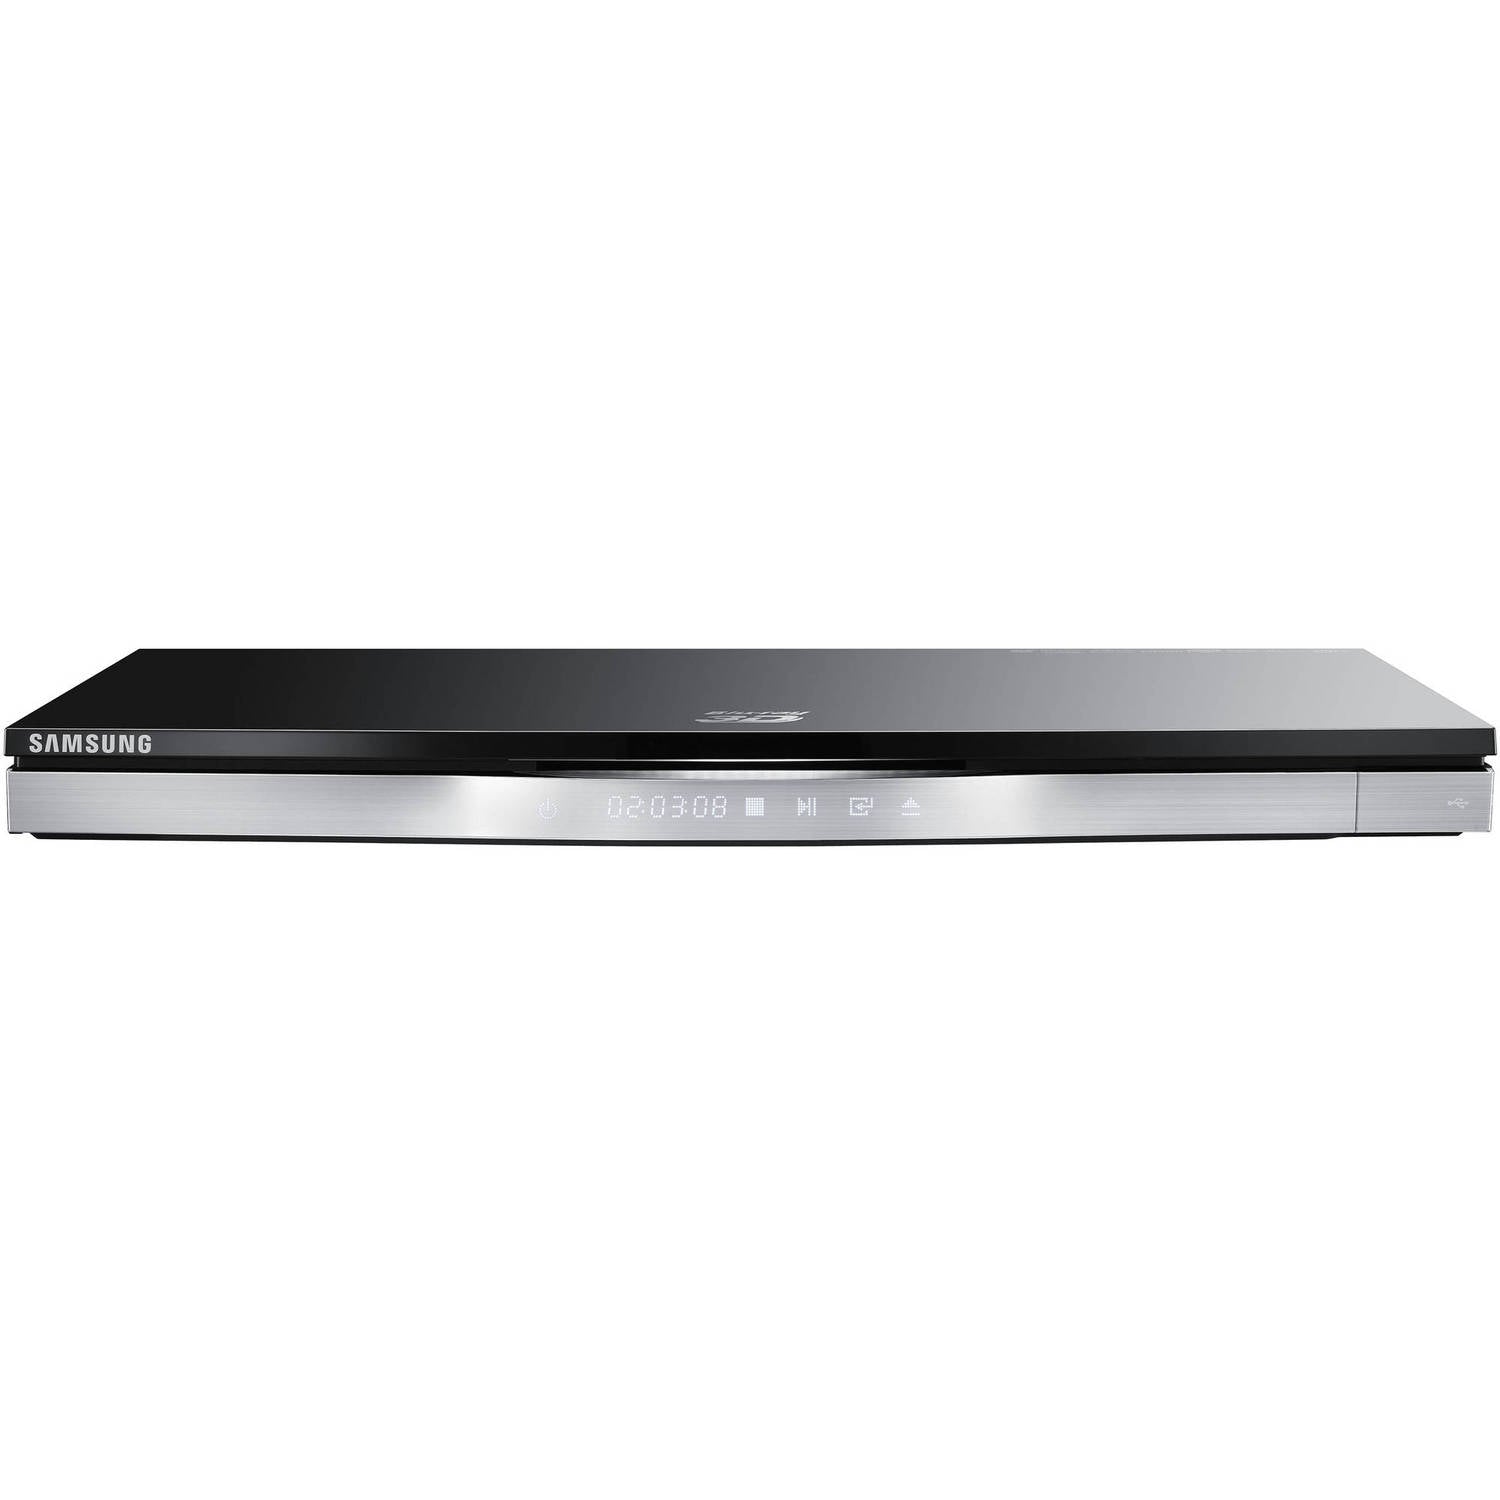 Samsung BDD6500 3D Blu-ray Disc Player (Black) - Samsung Parts USA